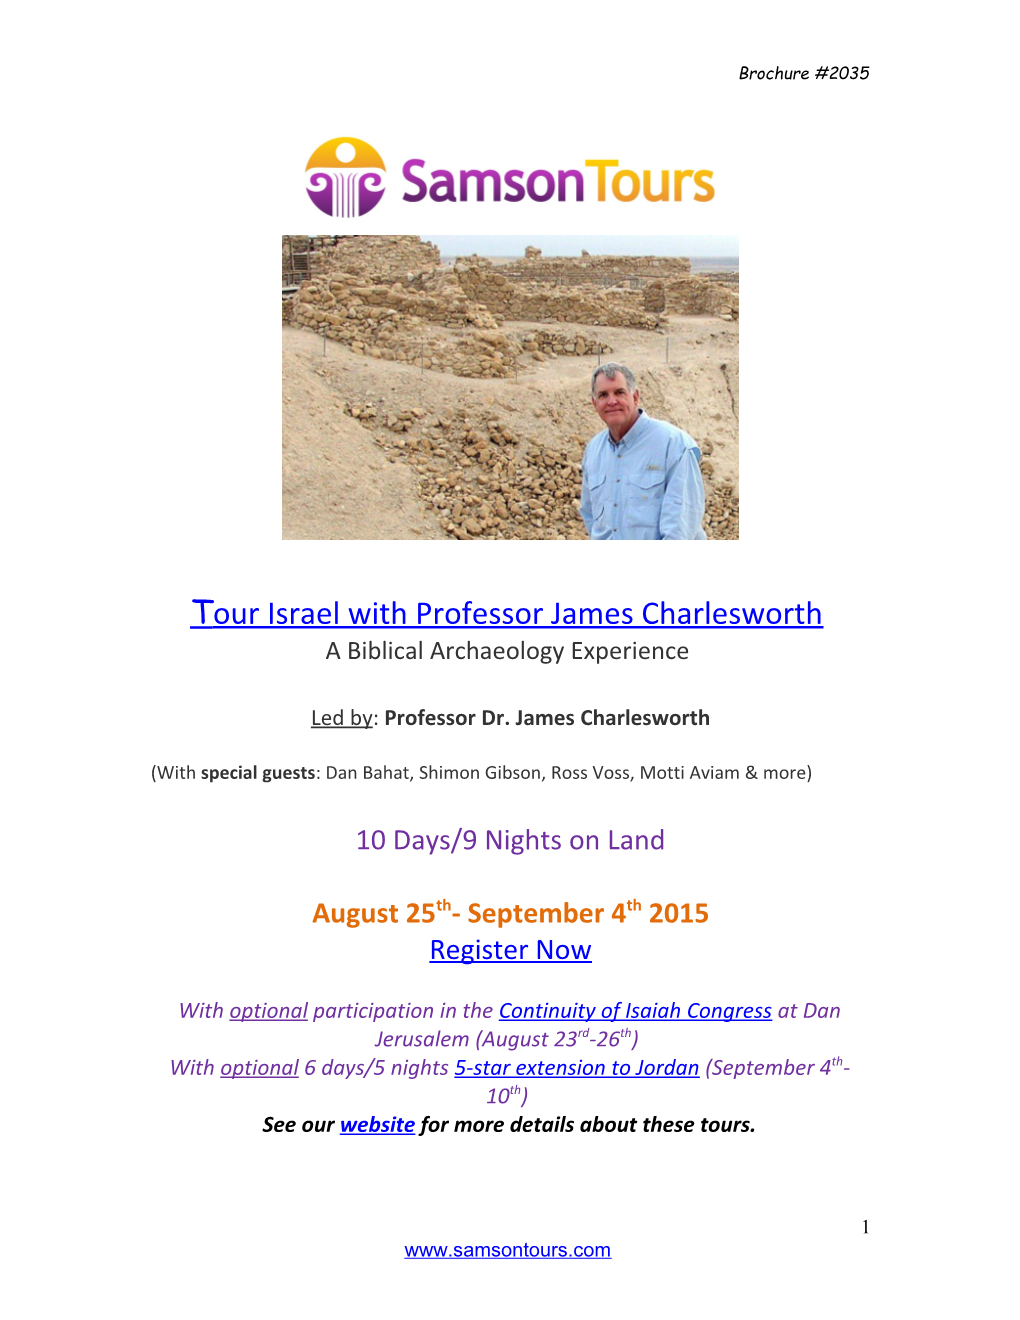 Tour Israel with Professor James Charlesworth